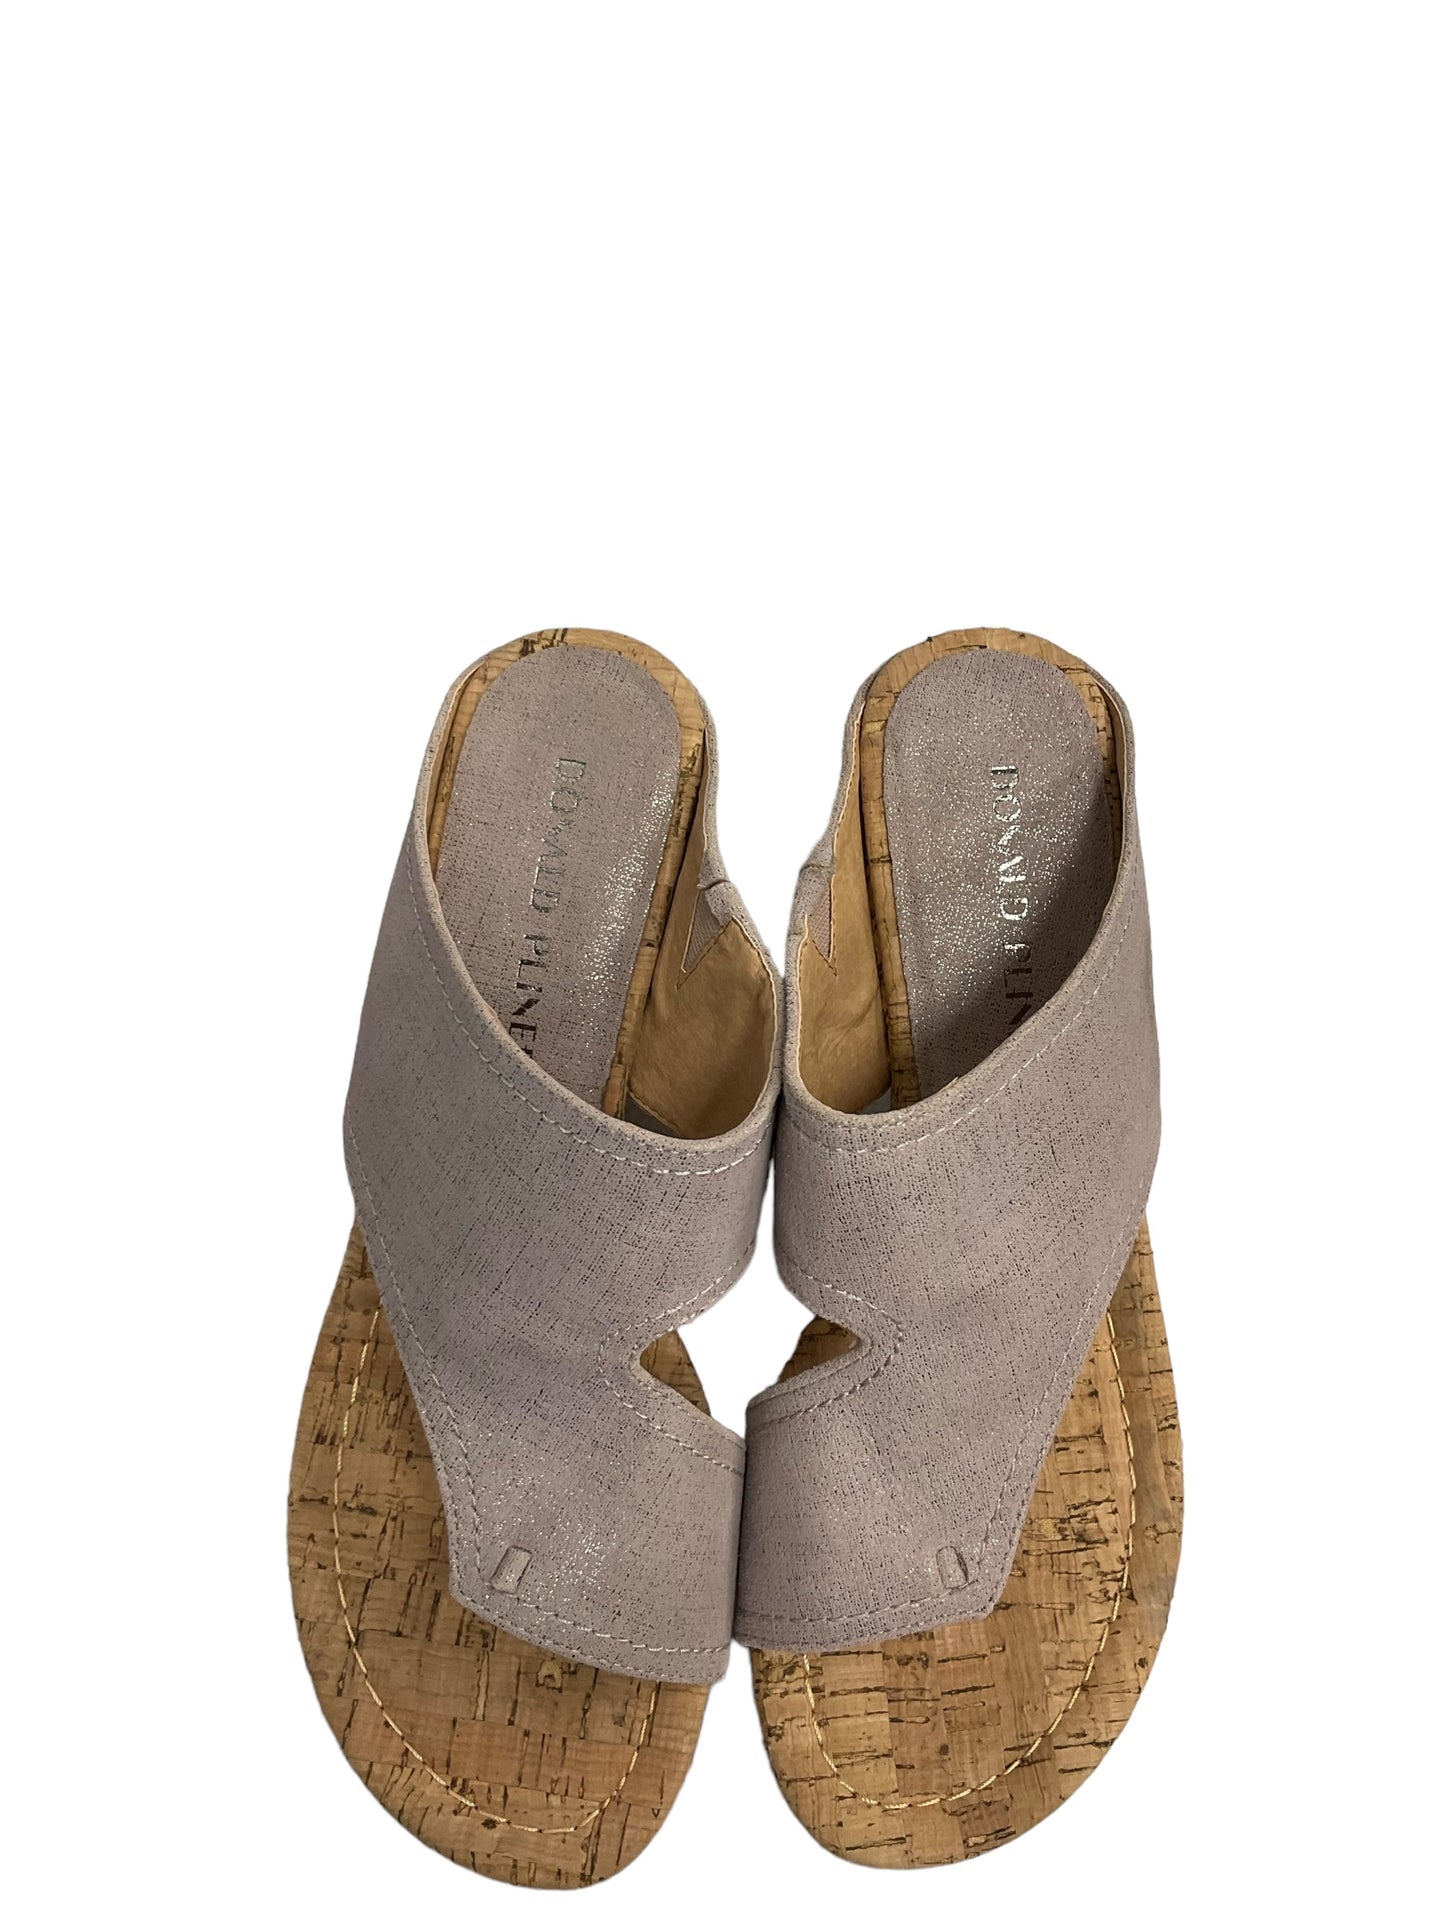 Sandals Heels Wedge By Donald Pliner  Size: 9